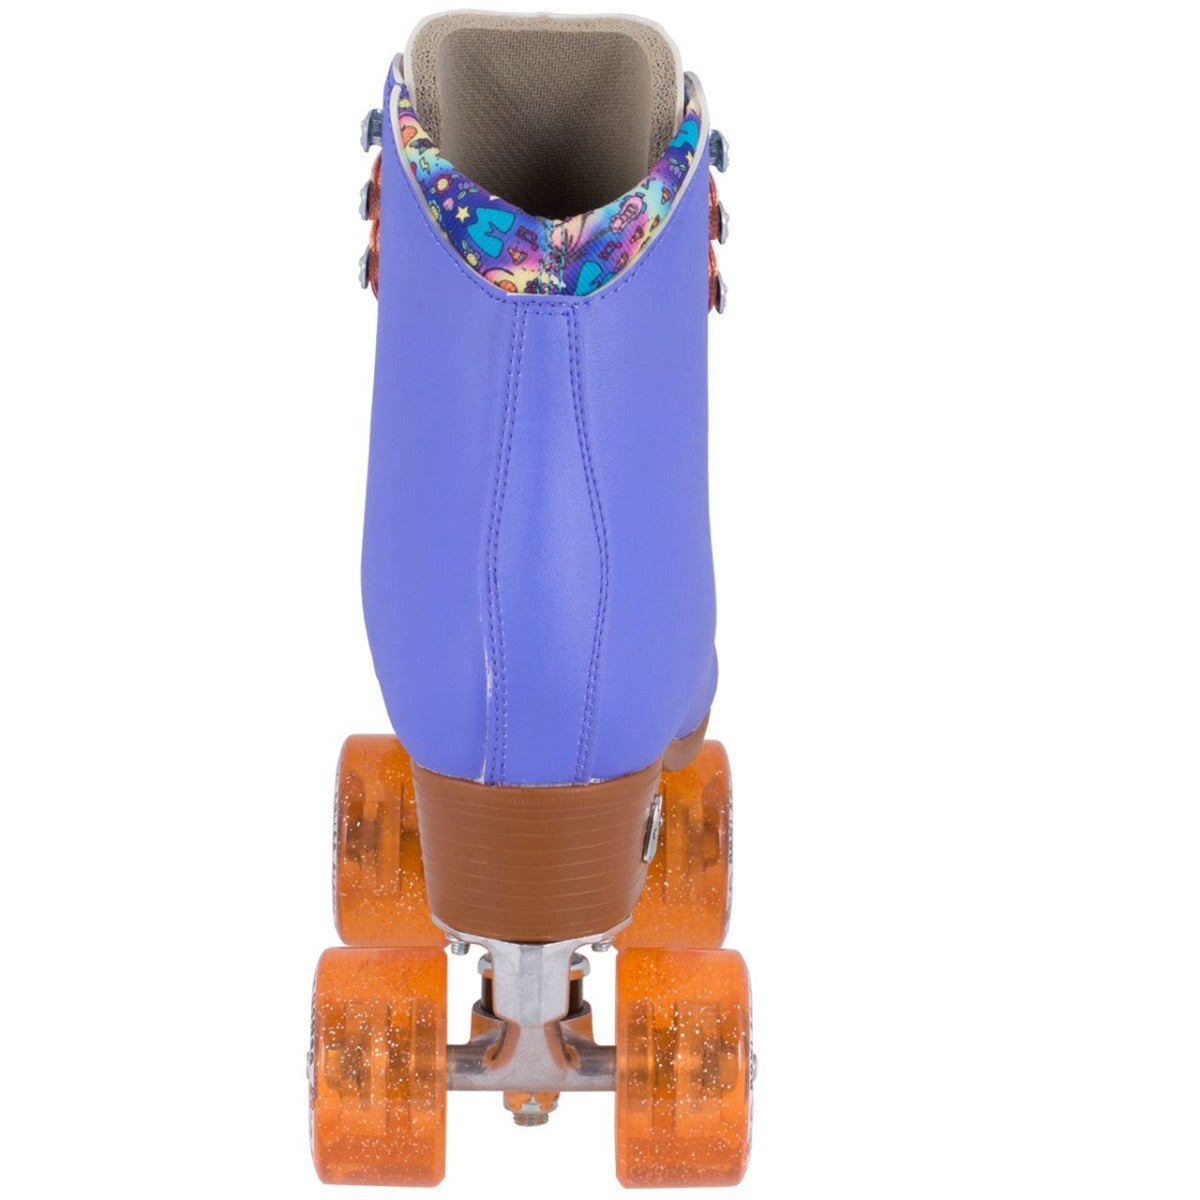 Moxi Beach Bunny Quad Roller Skates - Periwinkle - Rear